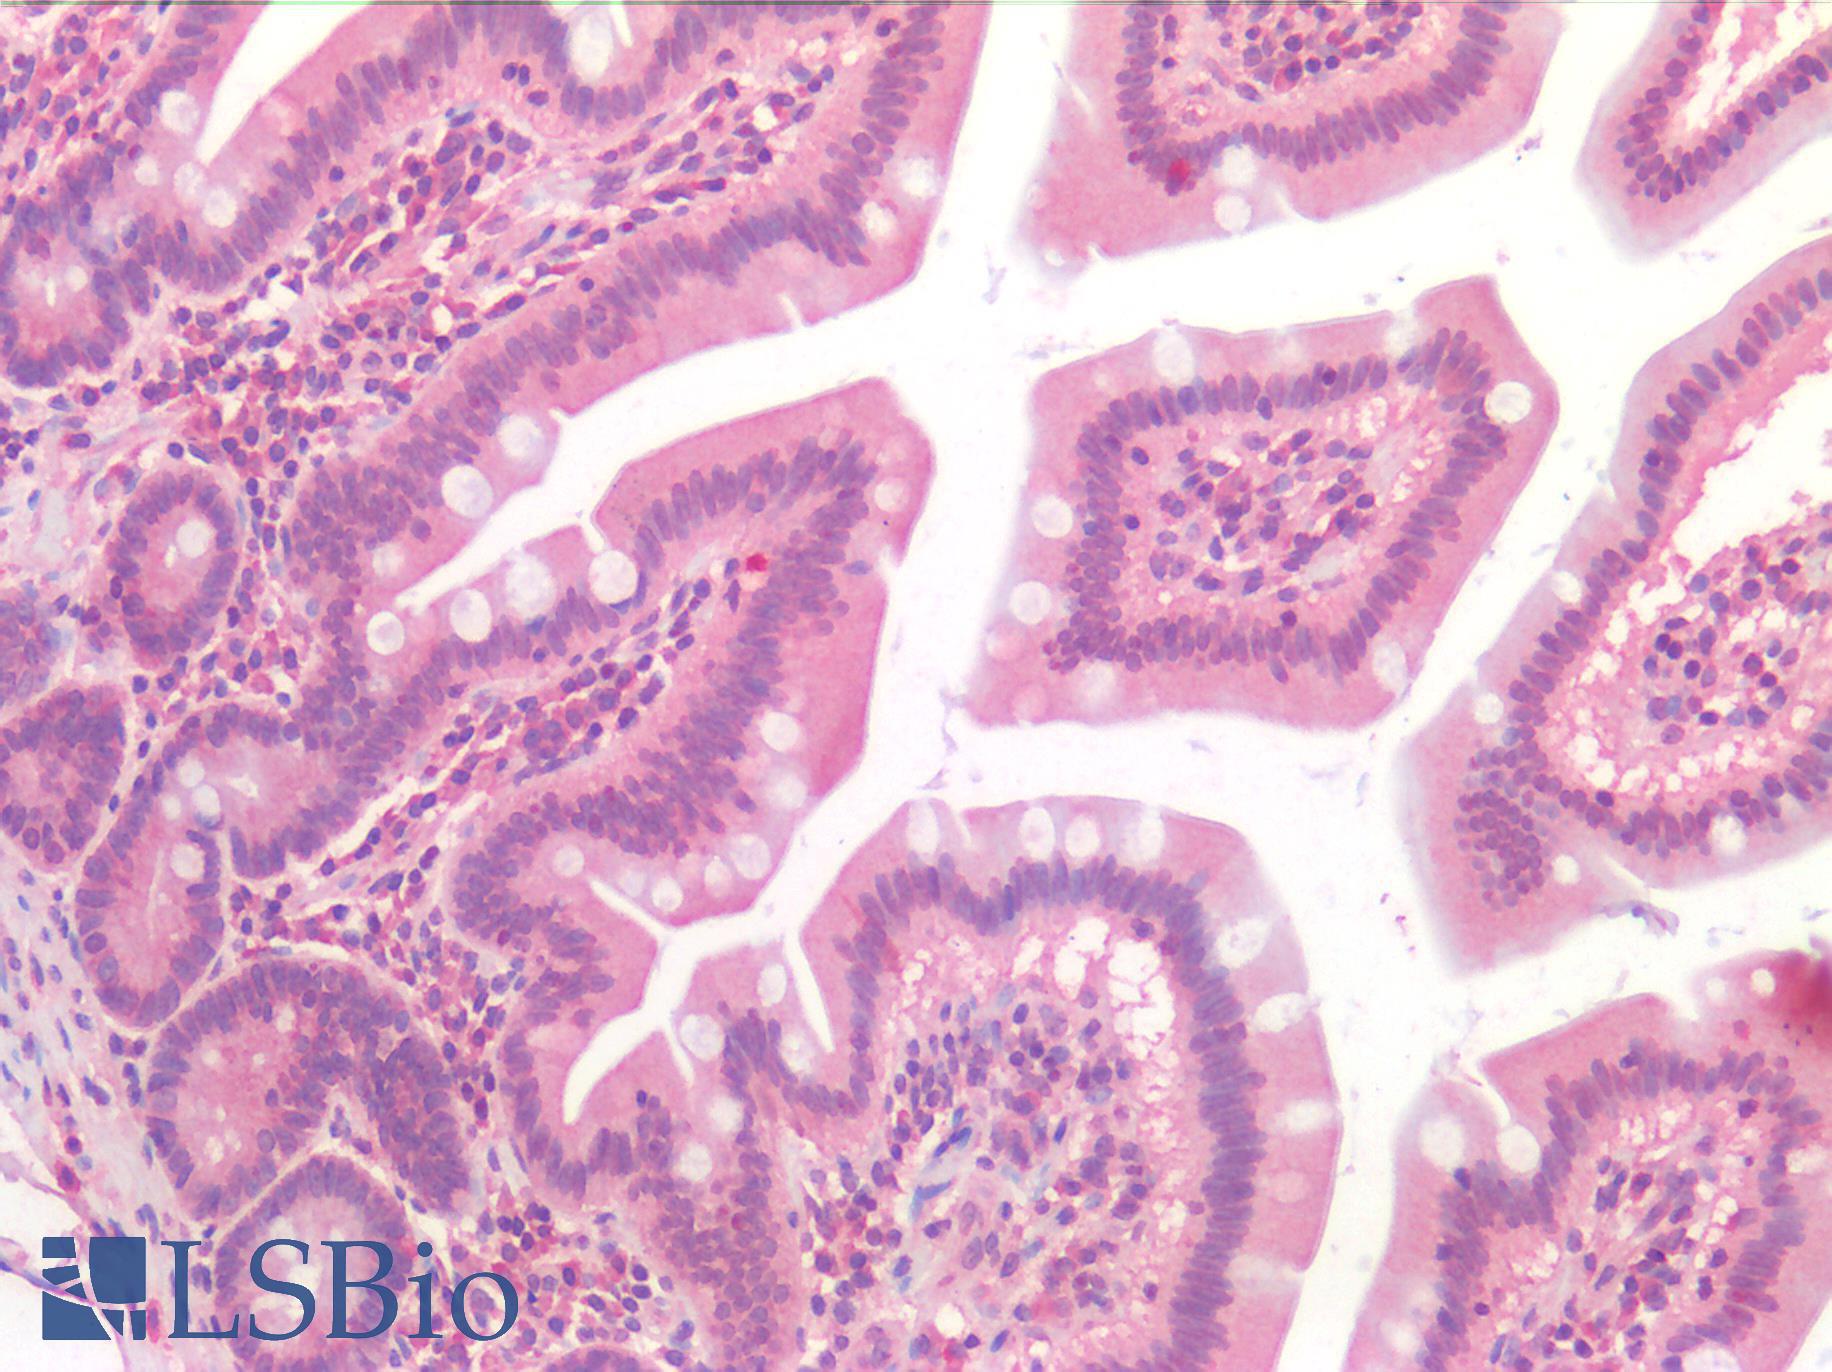 FOLH1 / PSMA Antibody - Human Small Intestine, Paraffin-Embedded (FFPE)